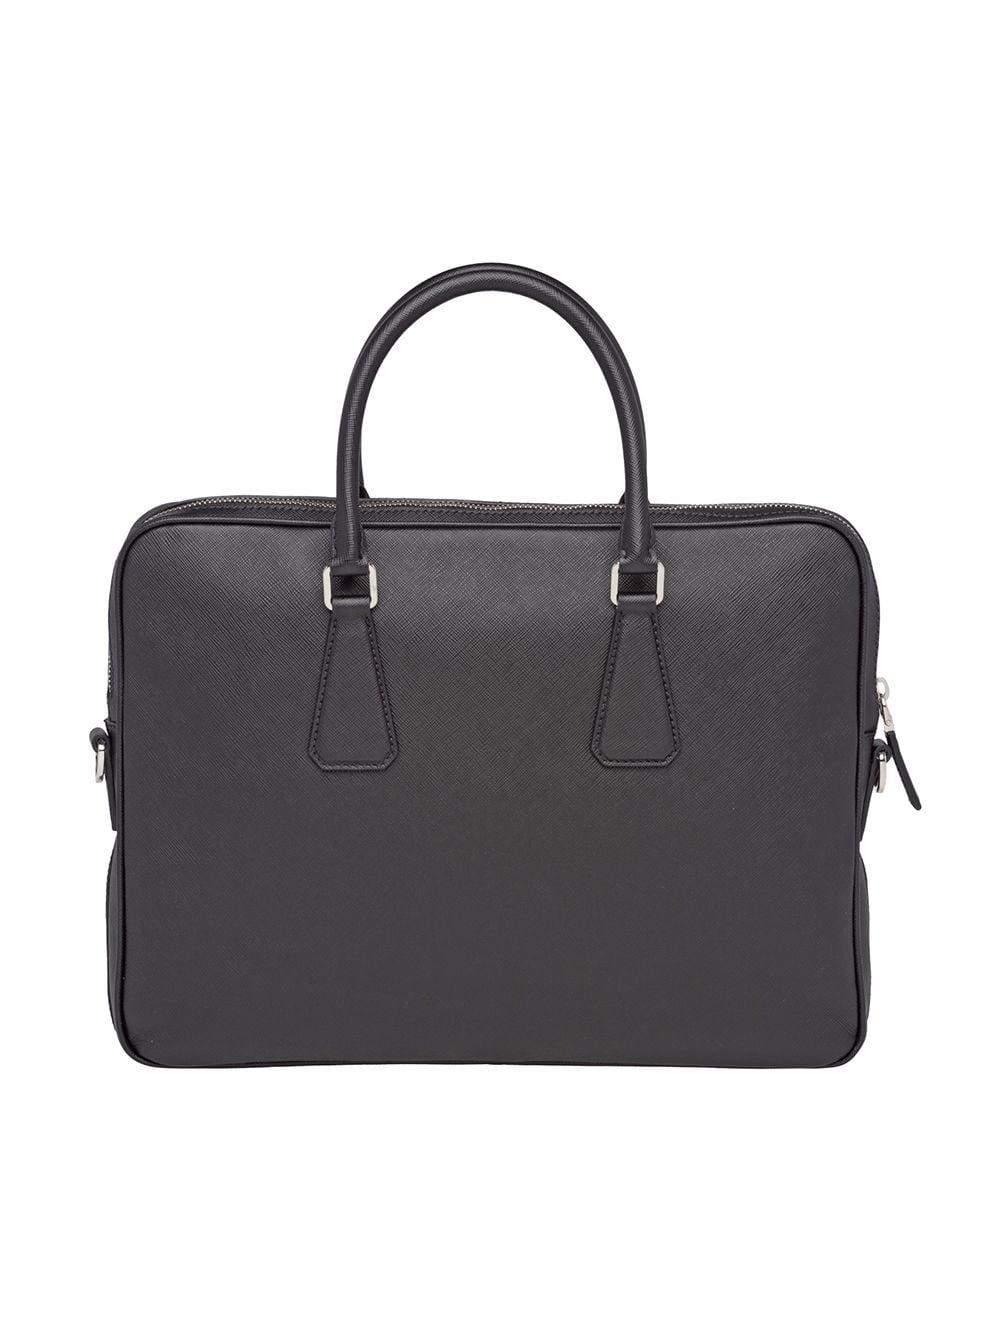 Prada Leather Saffiano Laptop Bag in Black for Men - Lyst